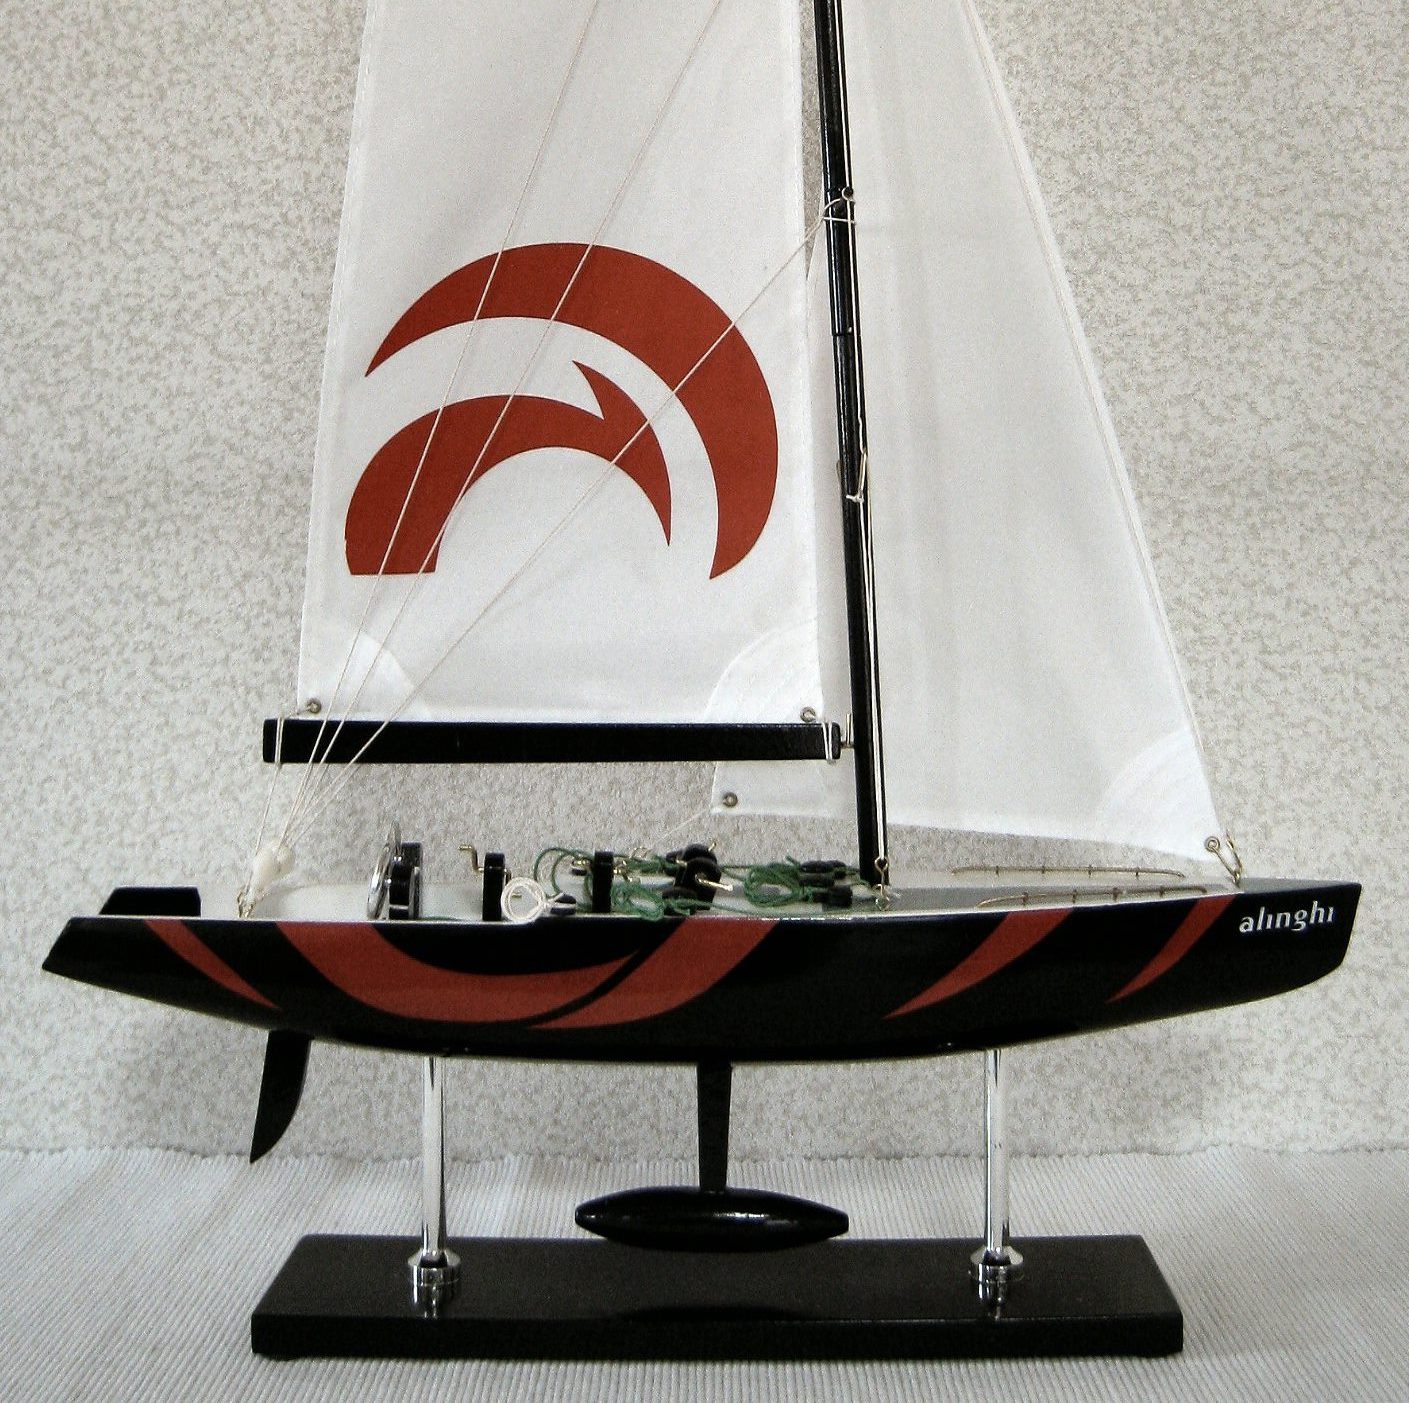 SUI 64 ALINGHI ヨット模型